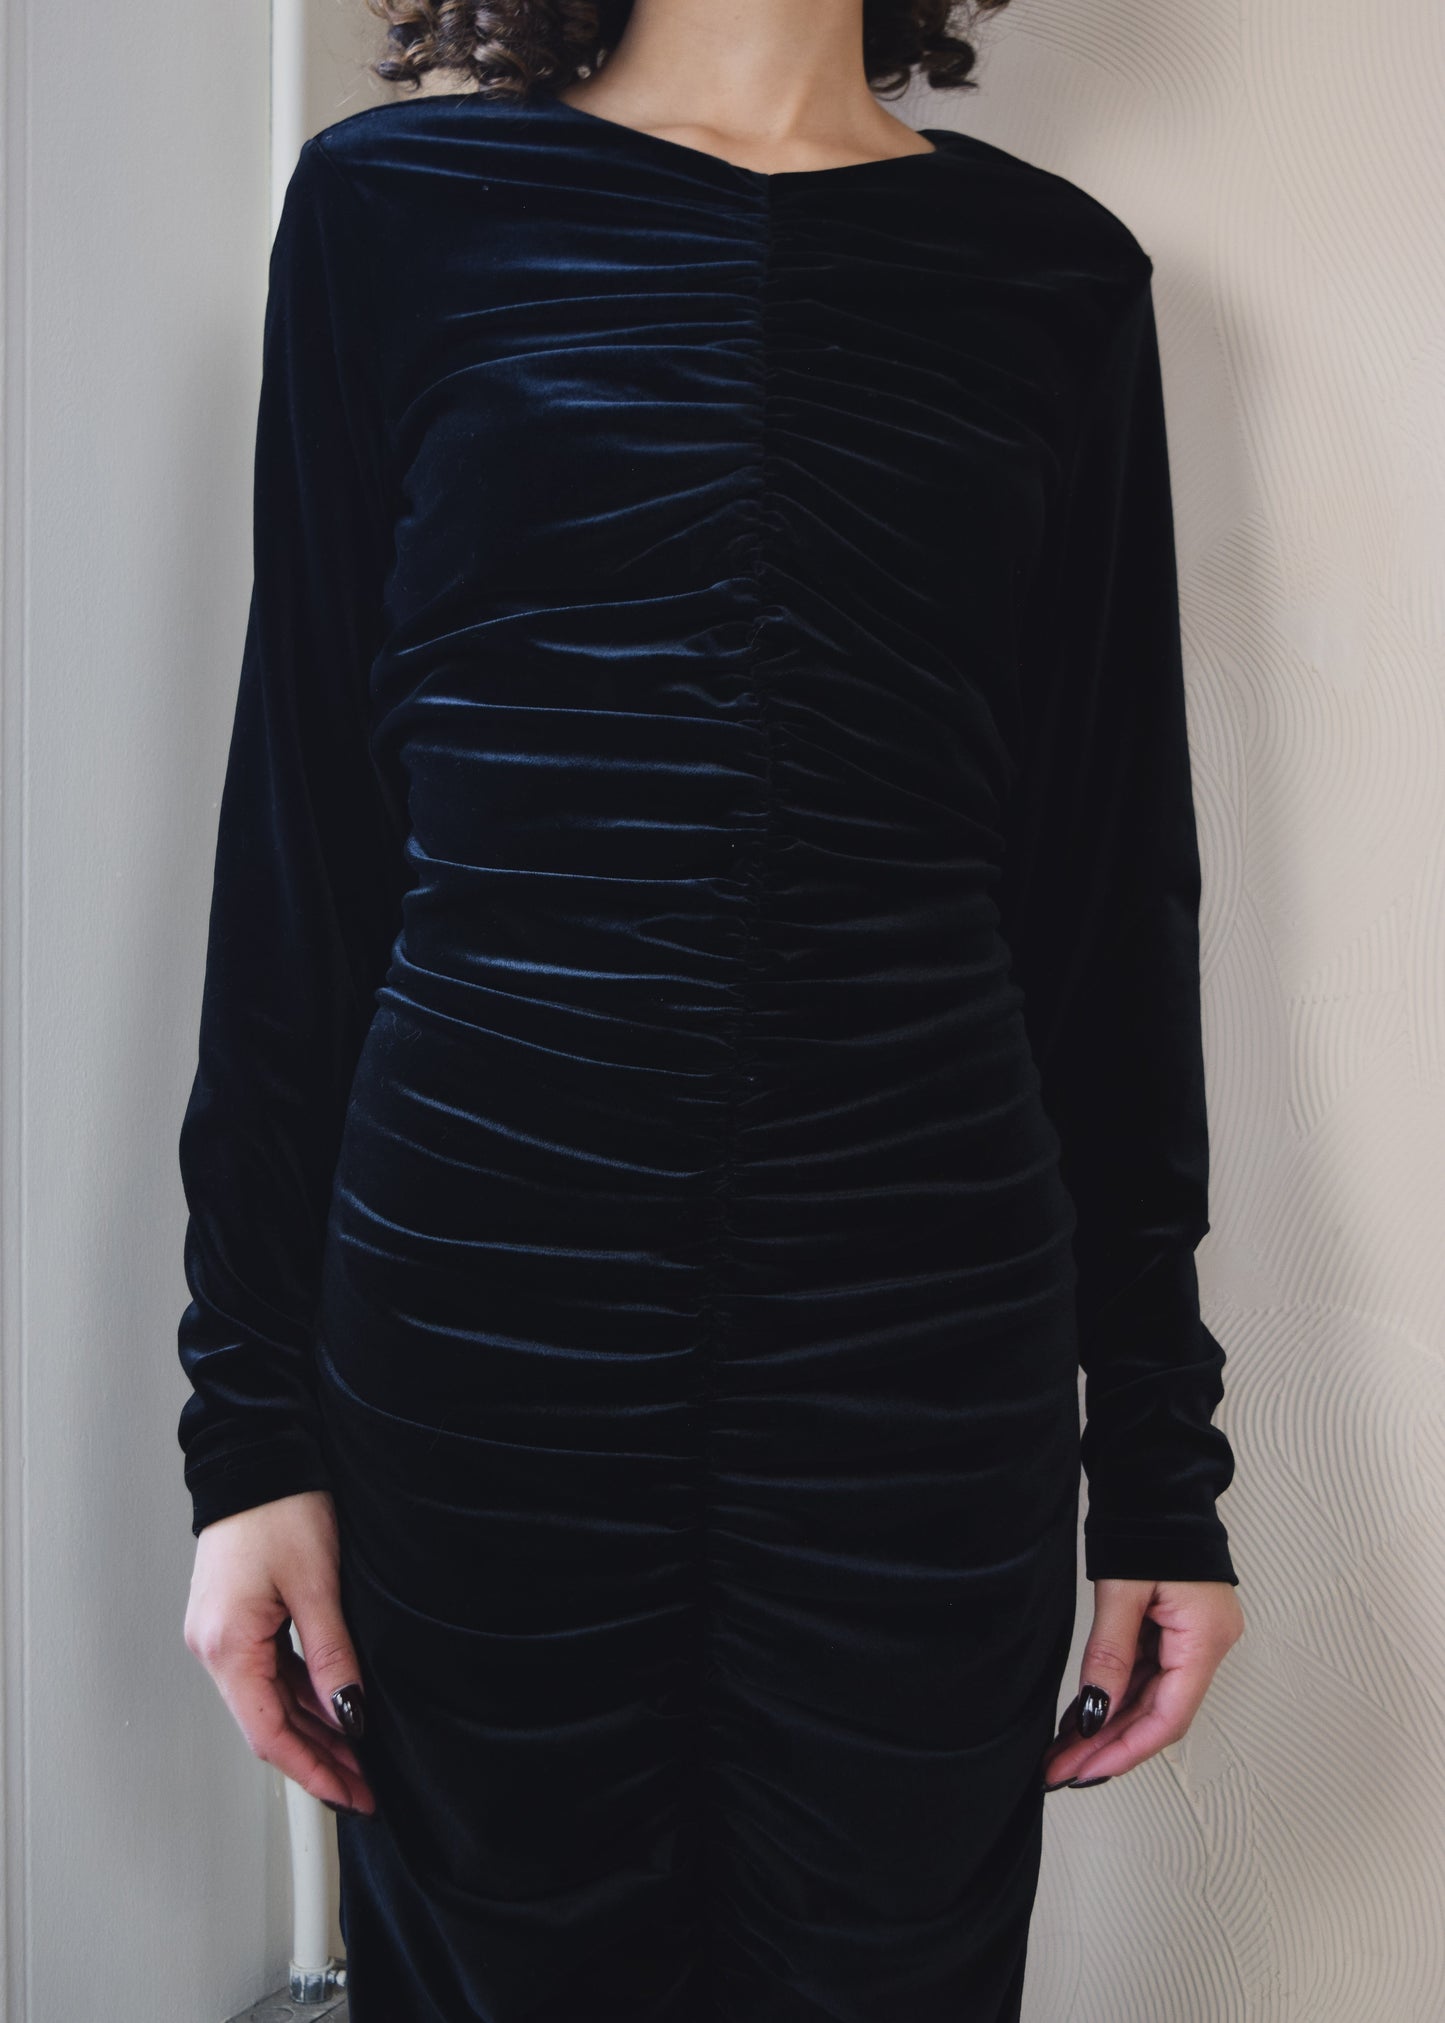 Mod Black Ruched Dress (M)